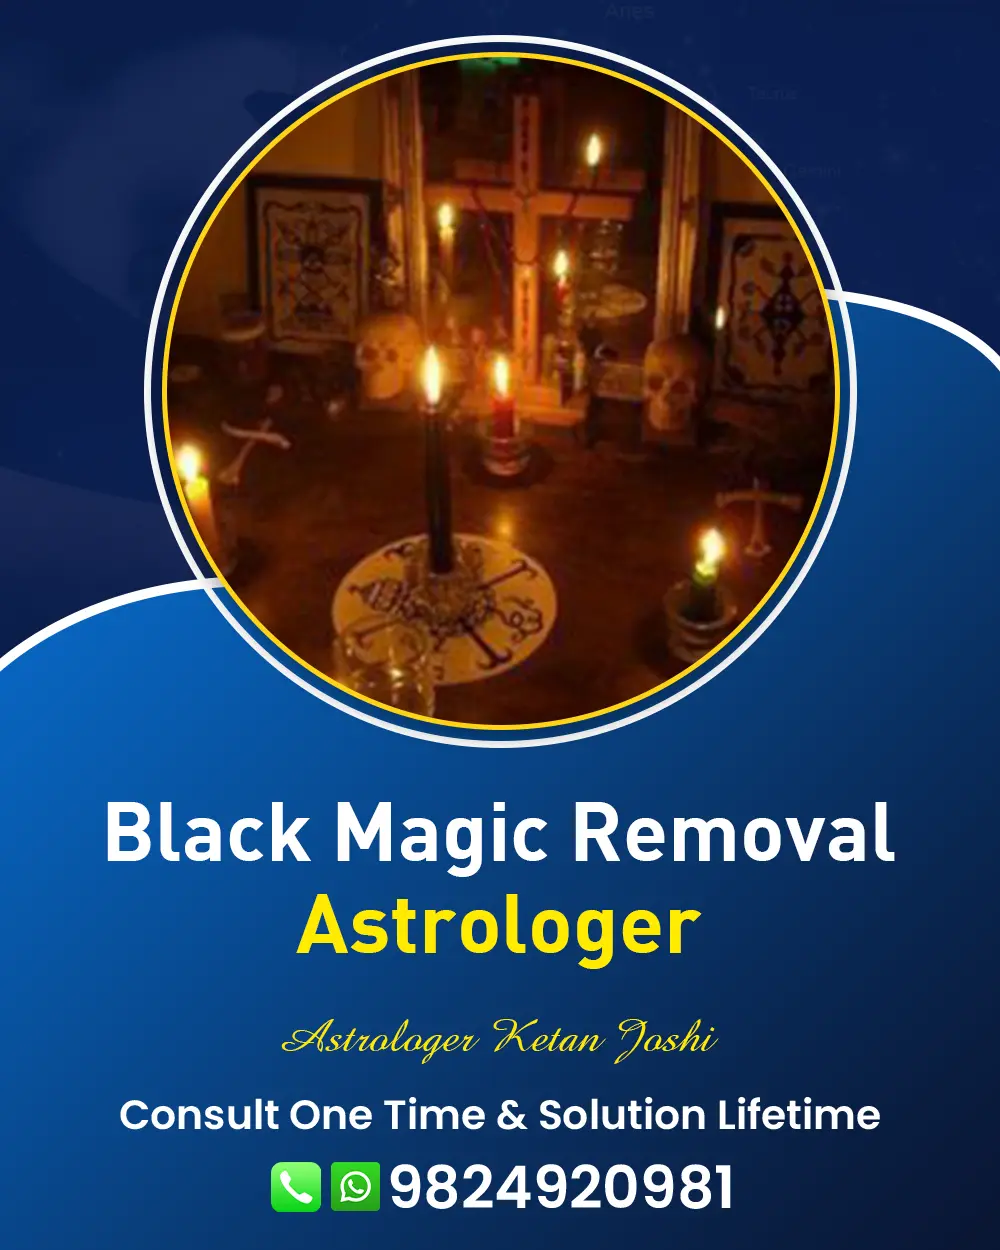 Black Magic Specialist Astrologer In Surat